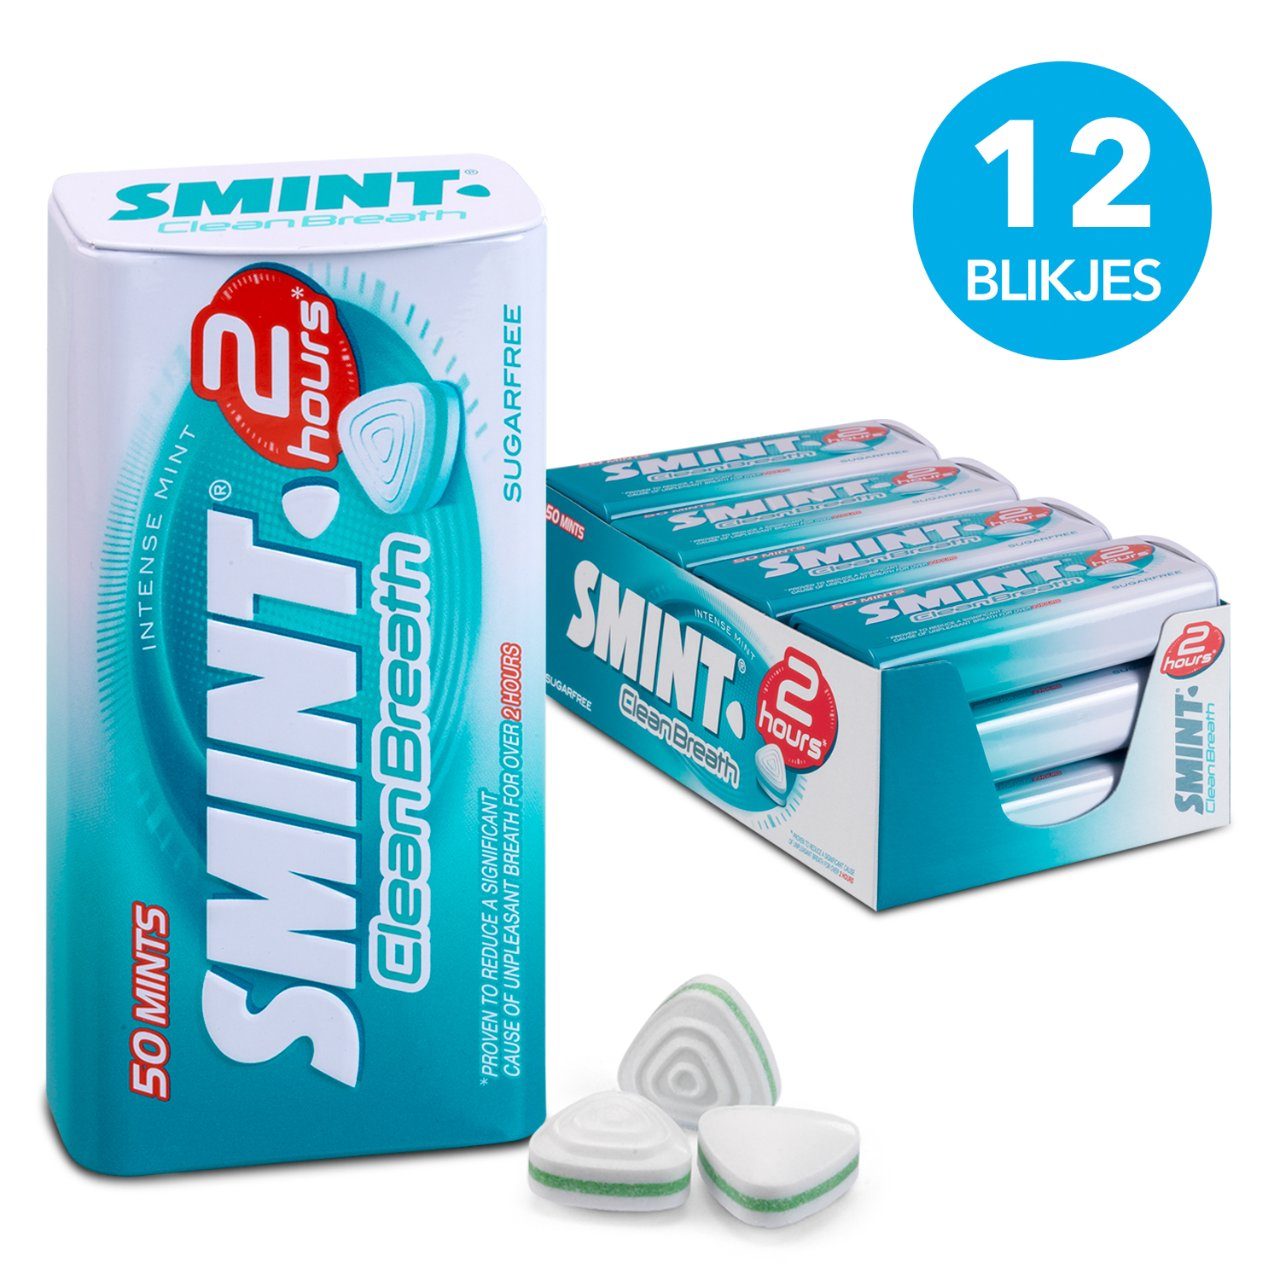 Mints clean breath, intense mint